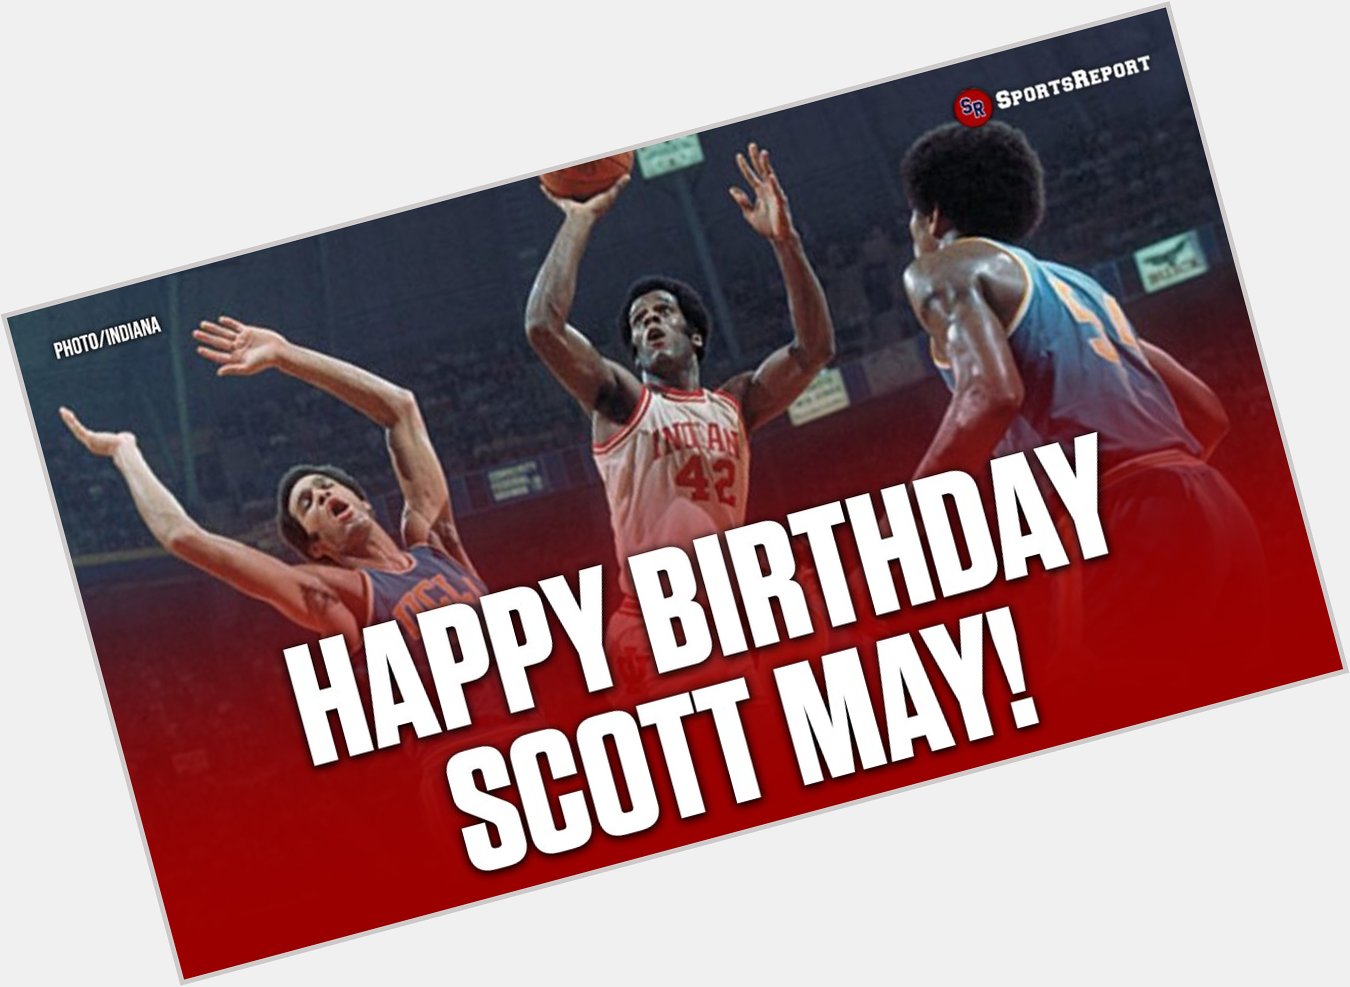  Fans, let\s wish Legend Scott May a Happy Birthday! 